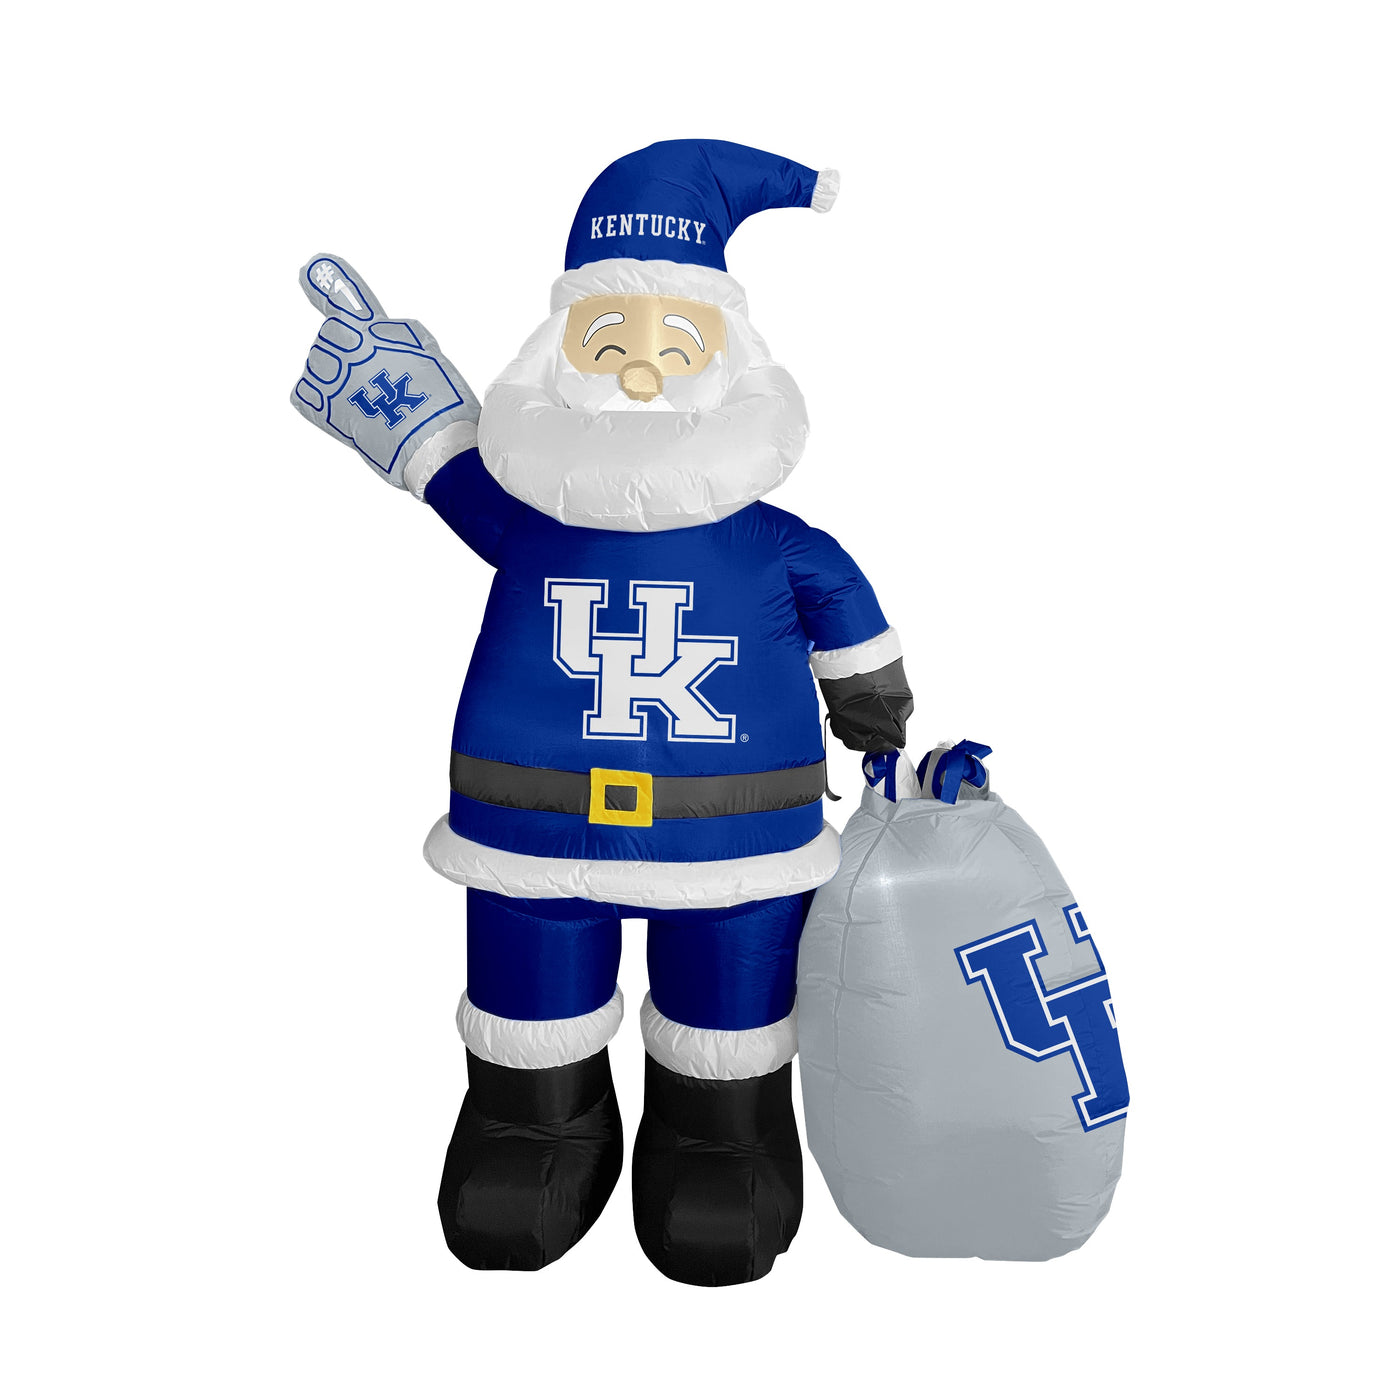 Kentucky Santa Claus Yard Inflatable